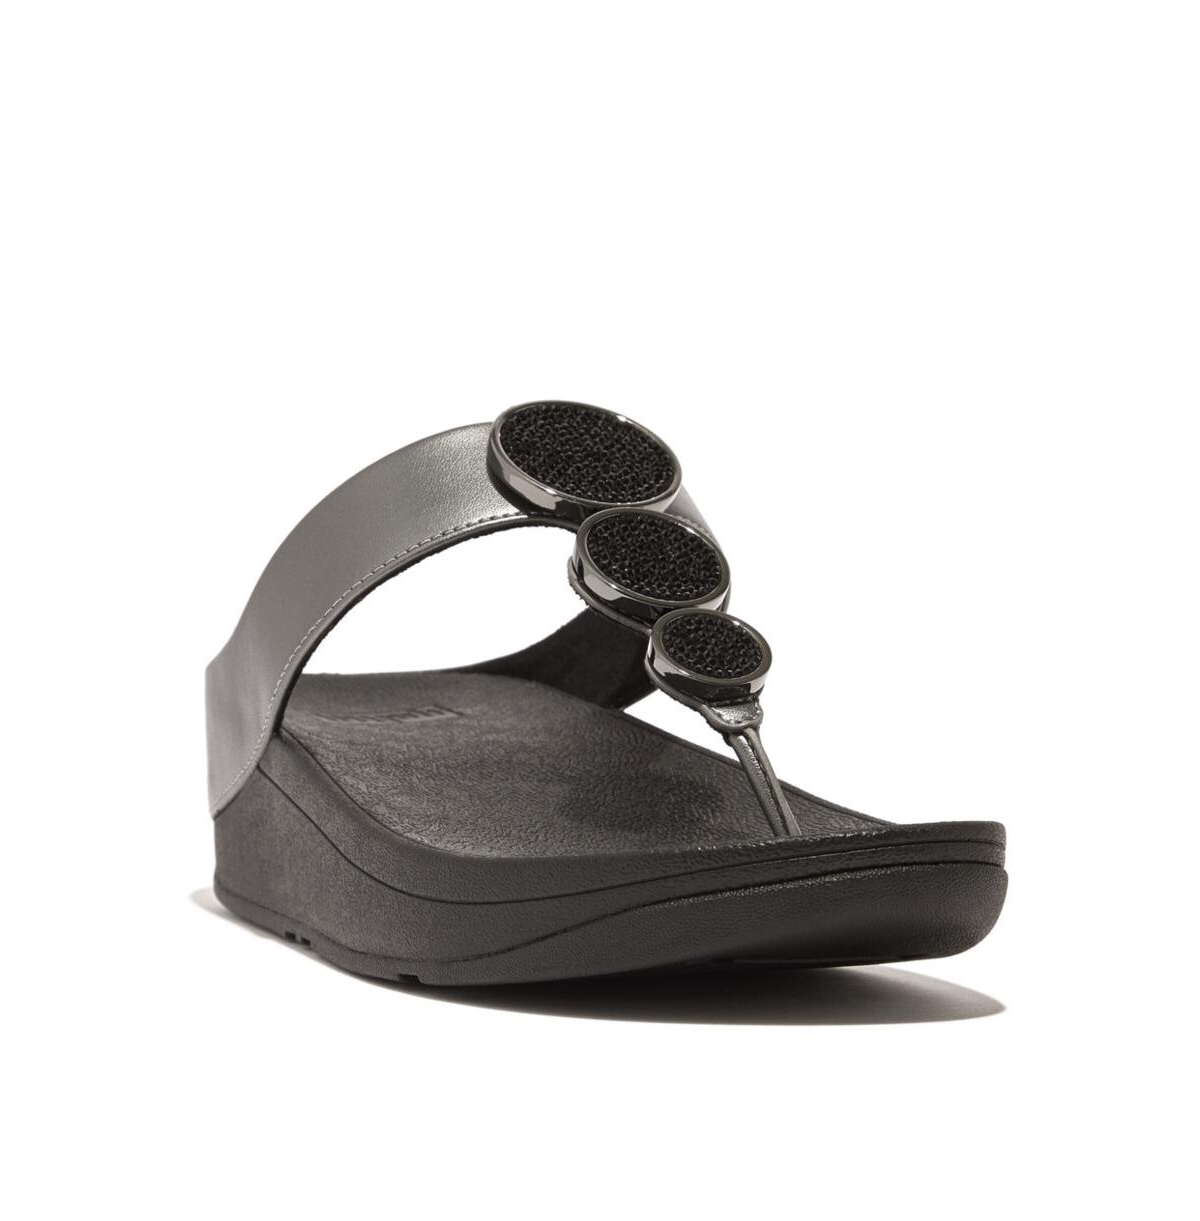 Women's Halo Bead-Circle Metallic Toe-Post Sandals - Pewter Black